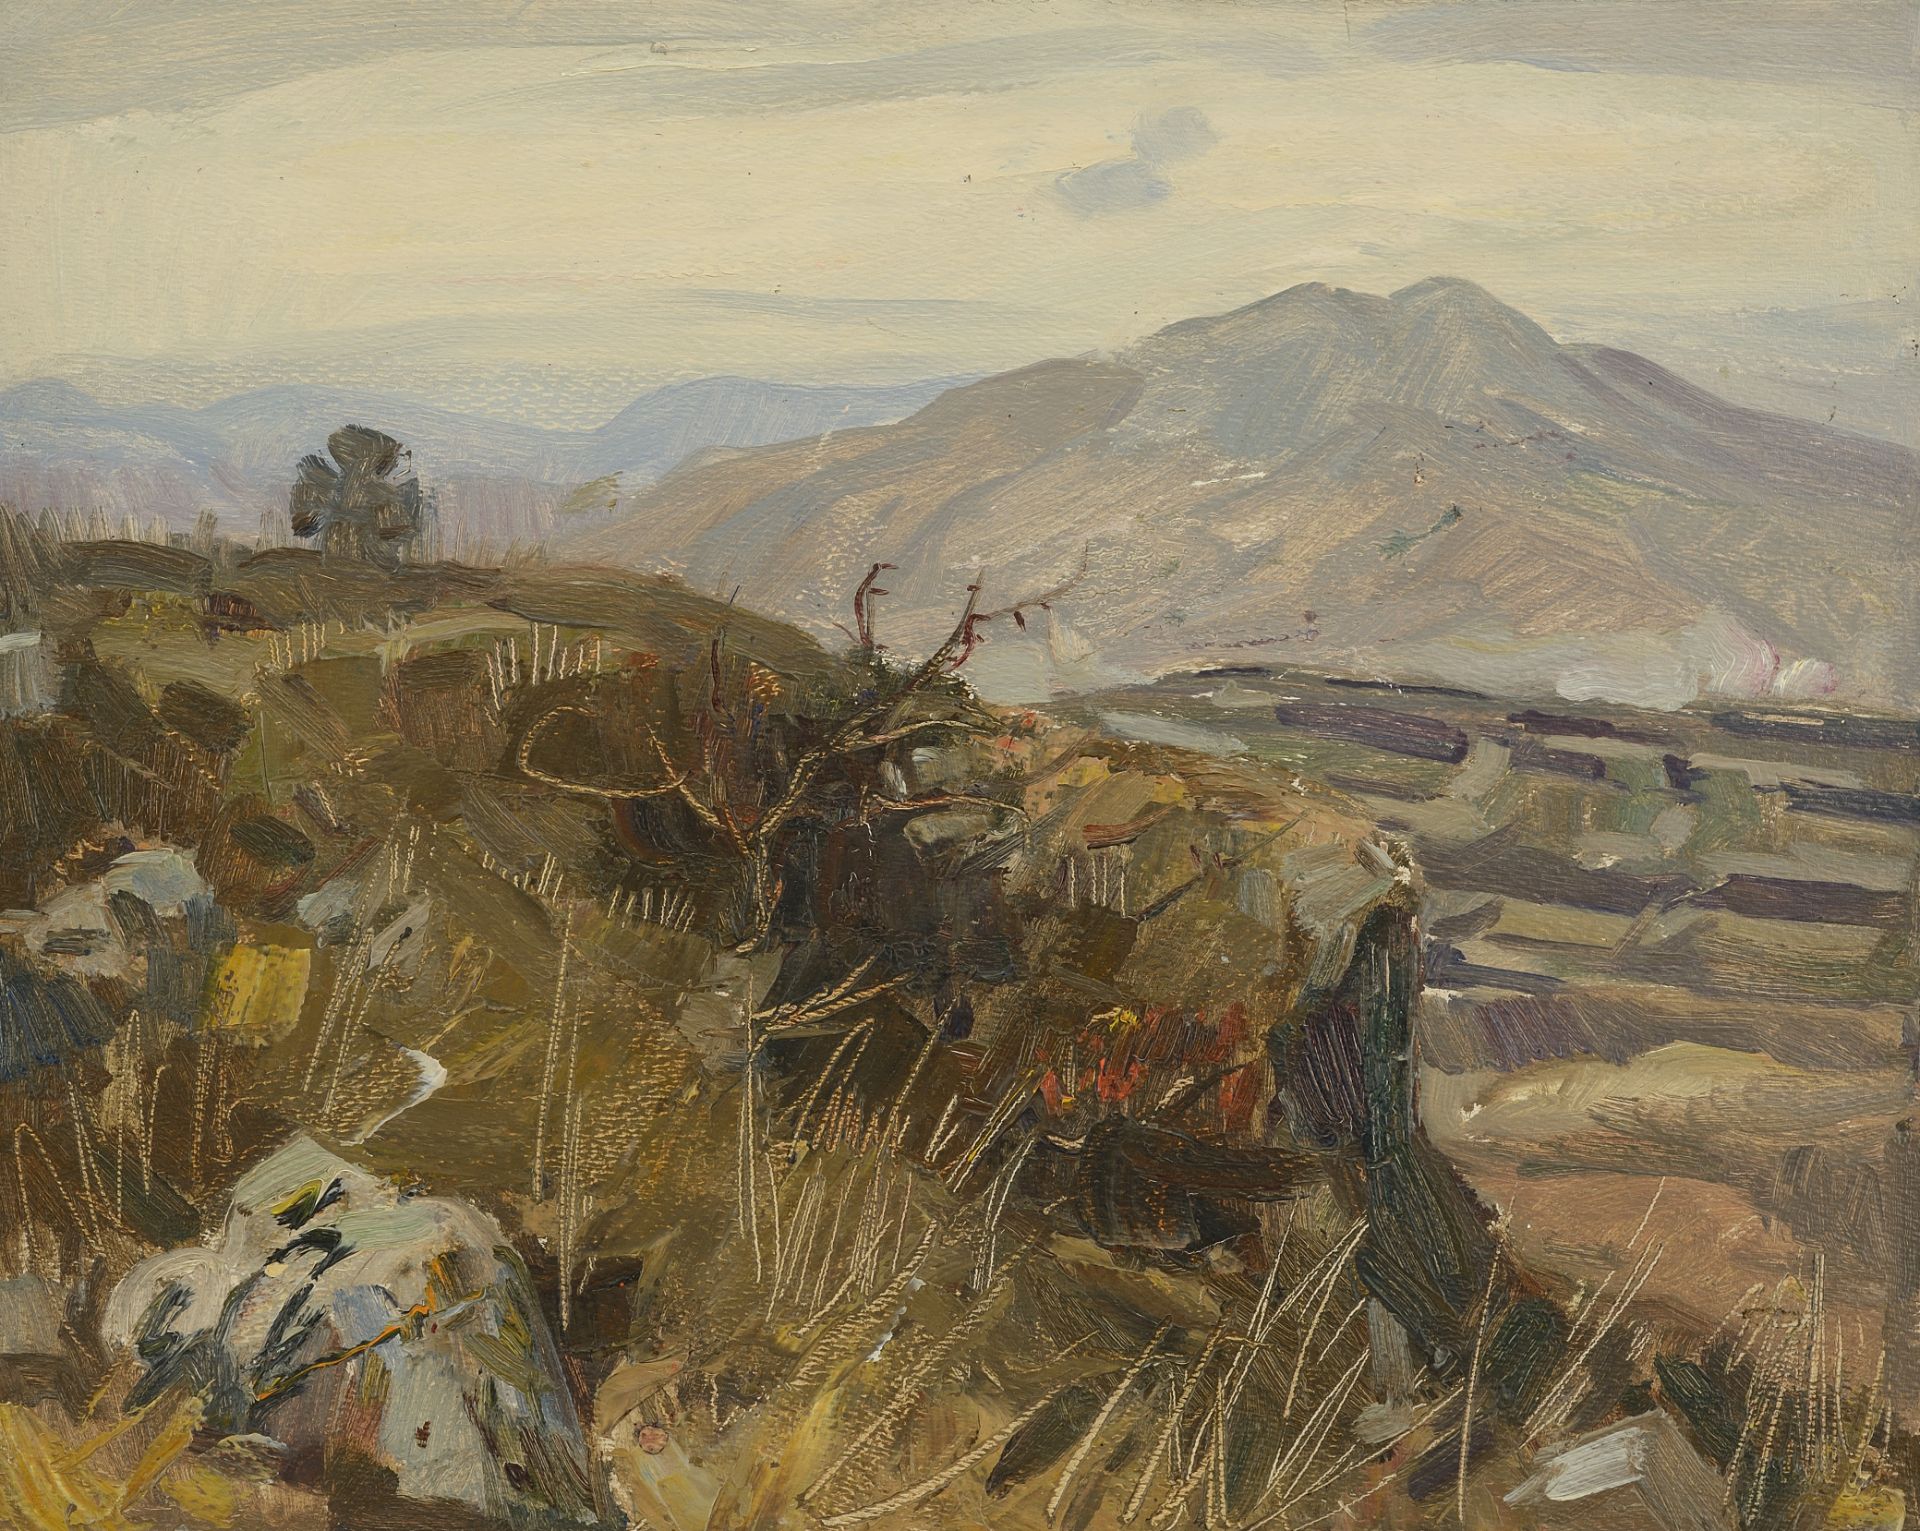 Dimitar Atanasov Gyuzhenov /1891-1979/  "Landscape with a Cross" 